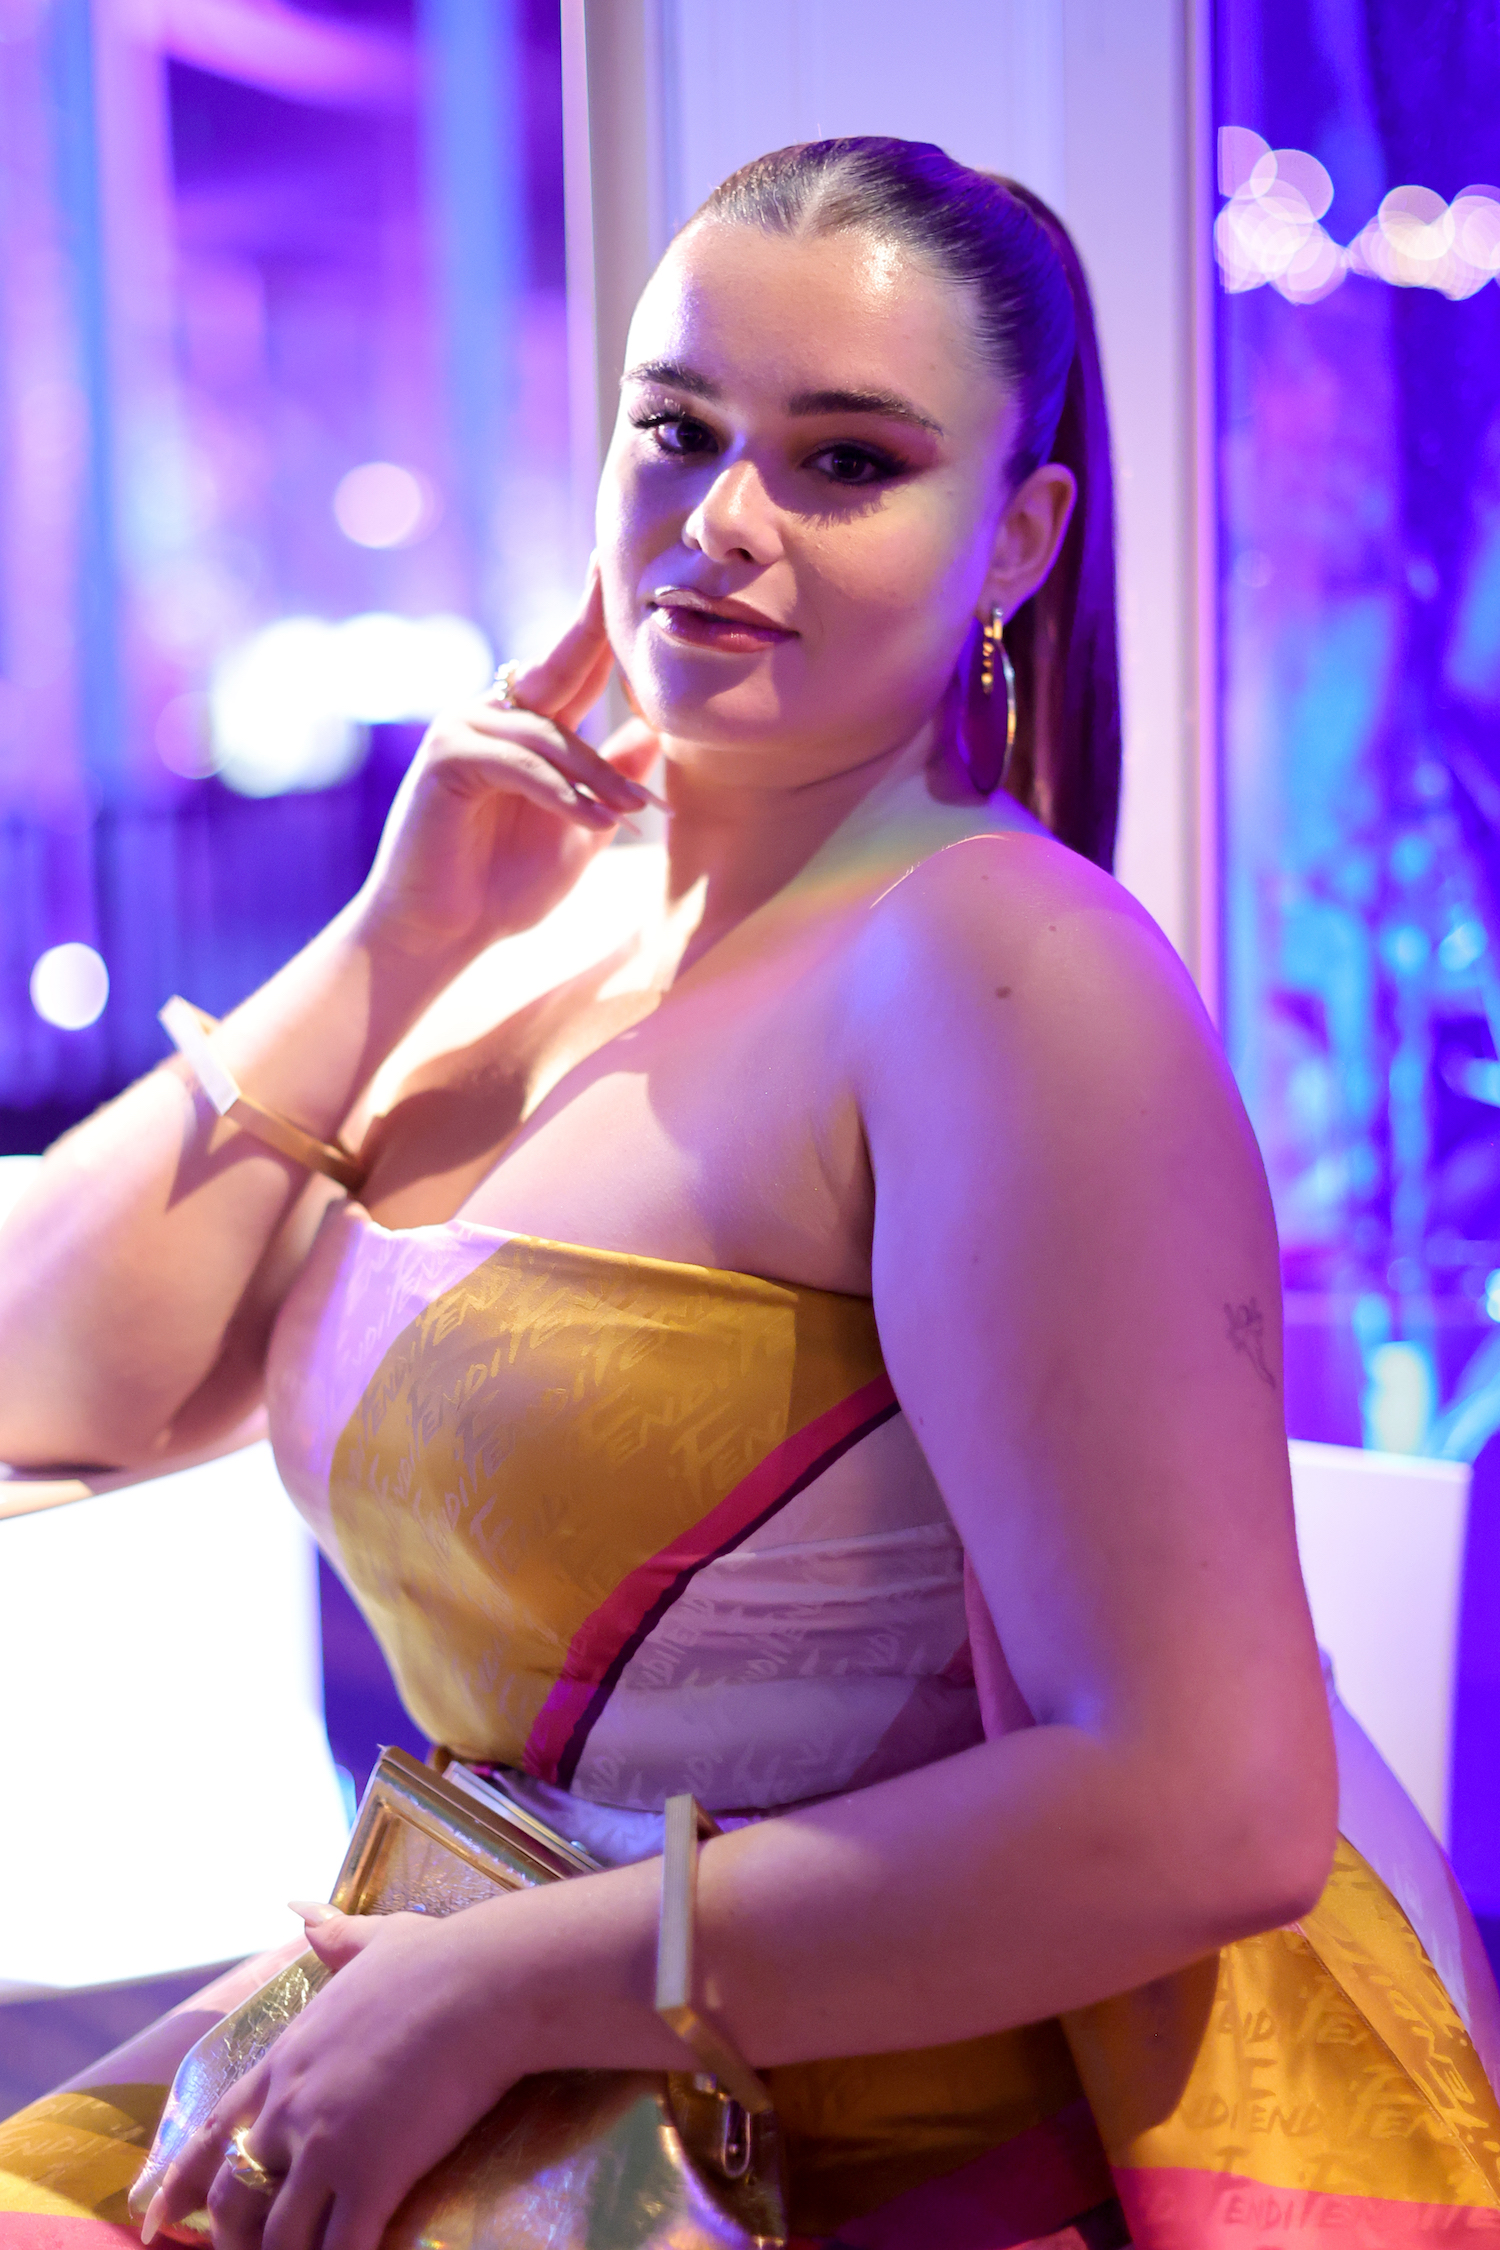 Barbie Ferreira attends the 2022 Vanity Fair Oscar Party